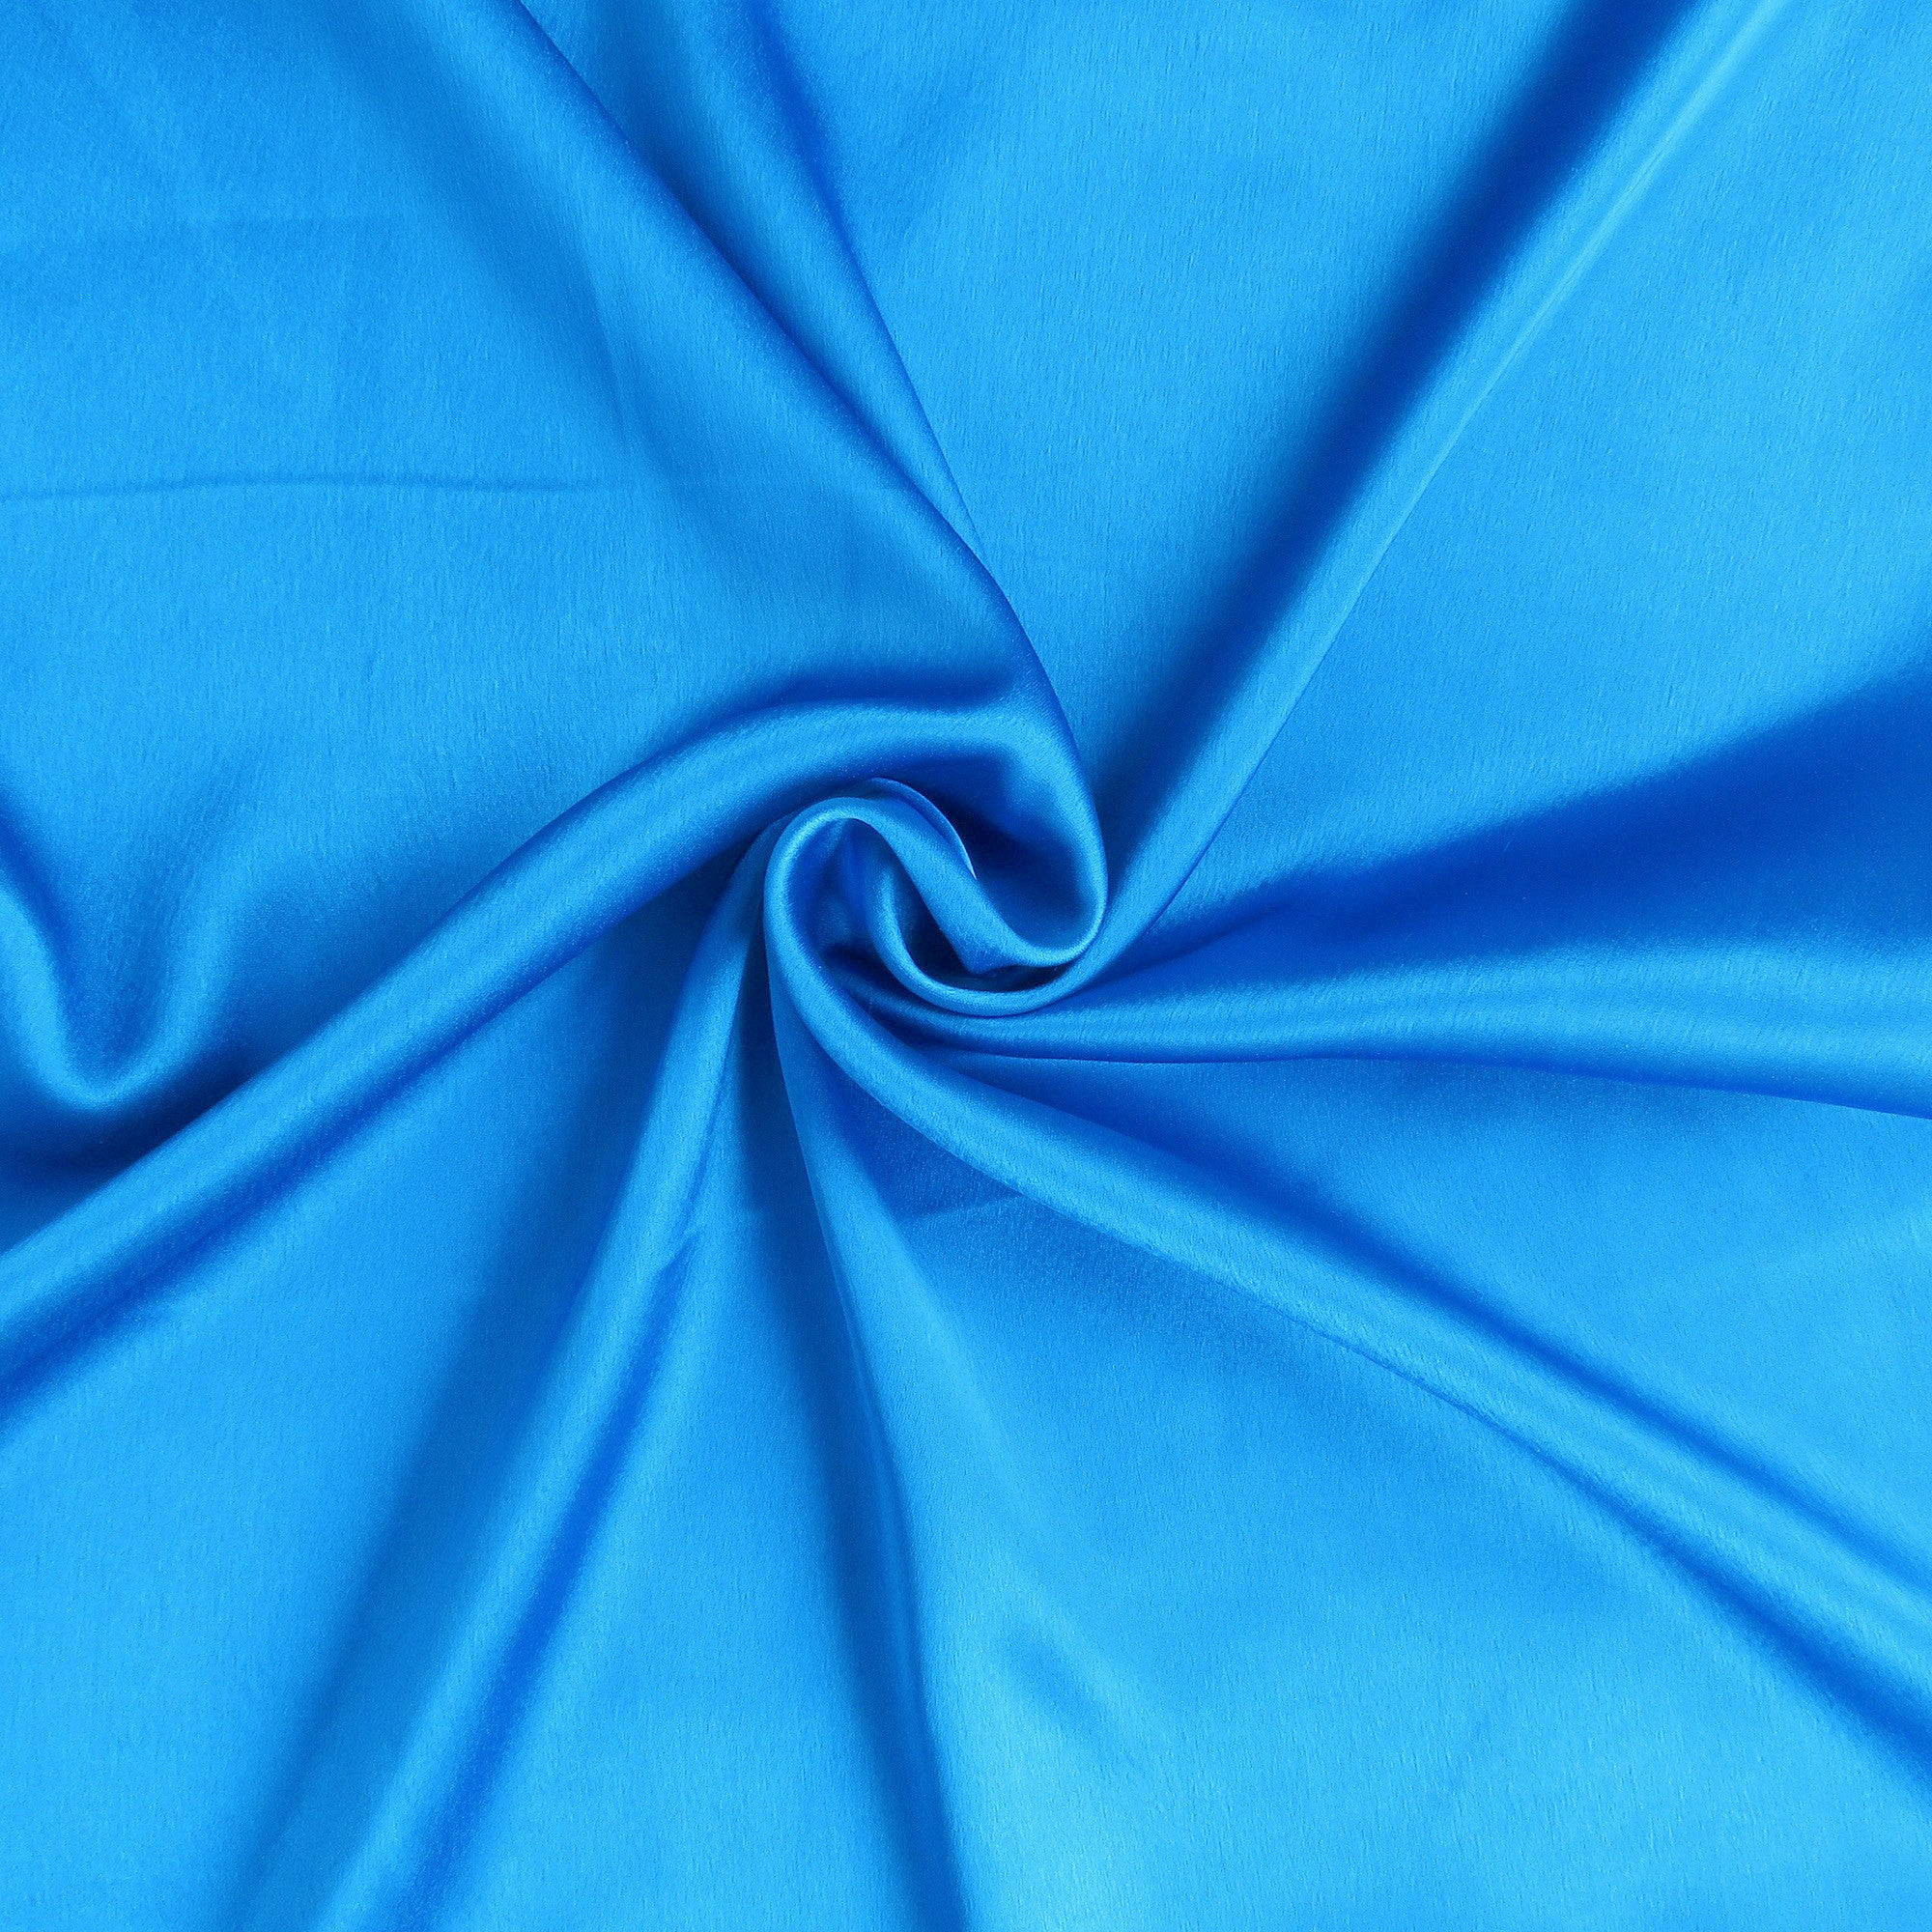 Bright Blue Dreamy Silky Satin King Size Pillowcase